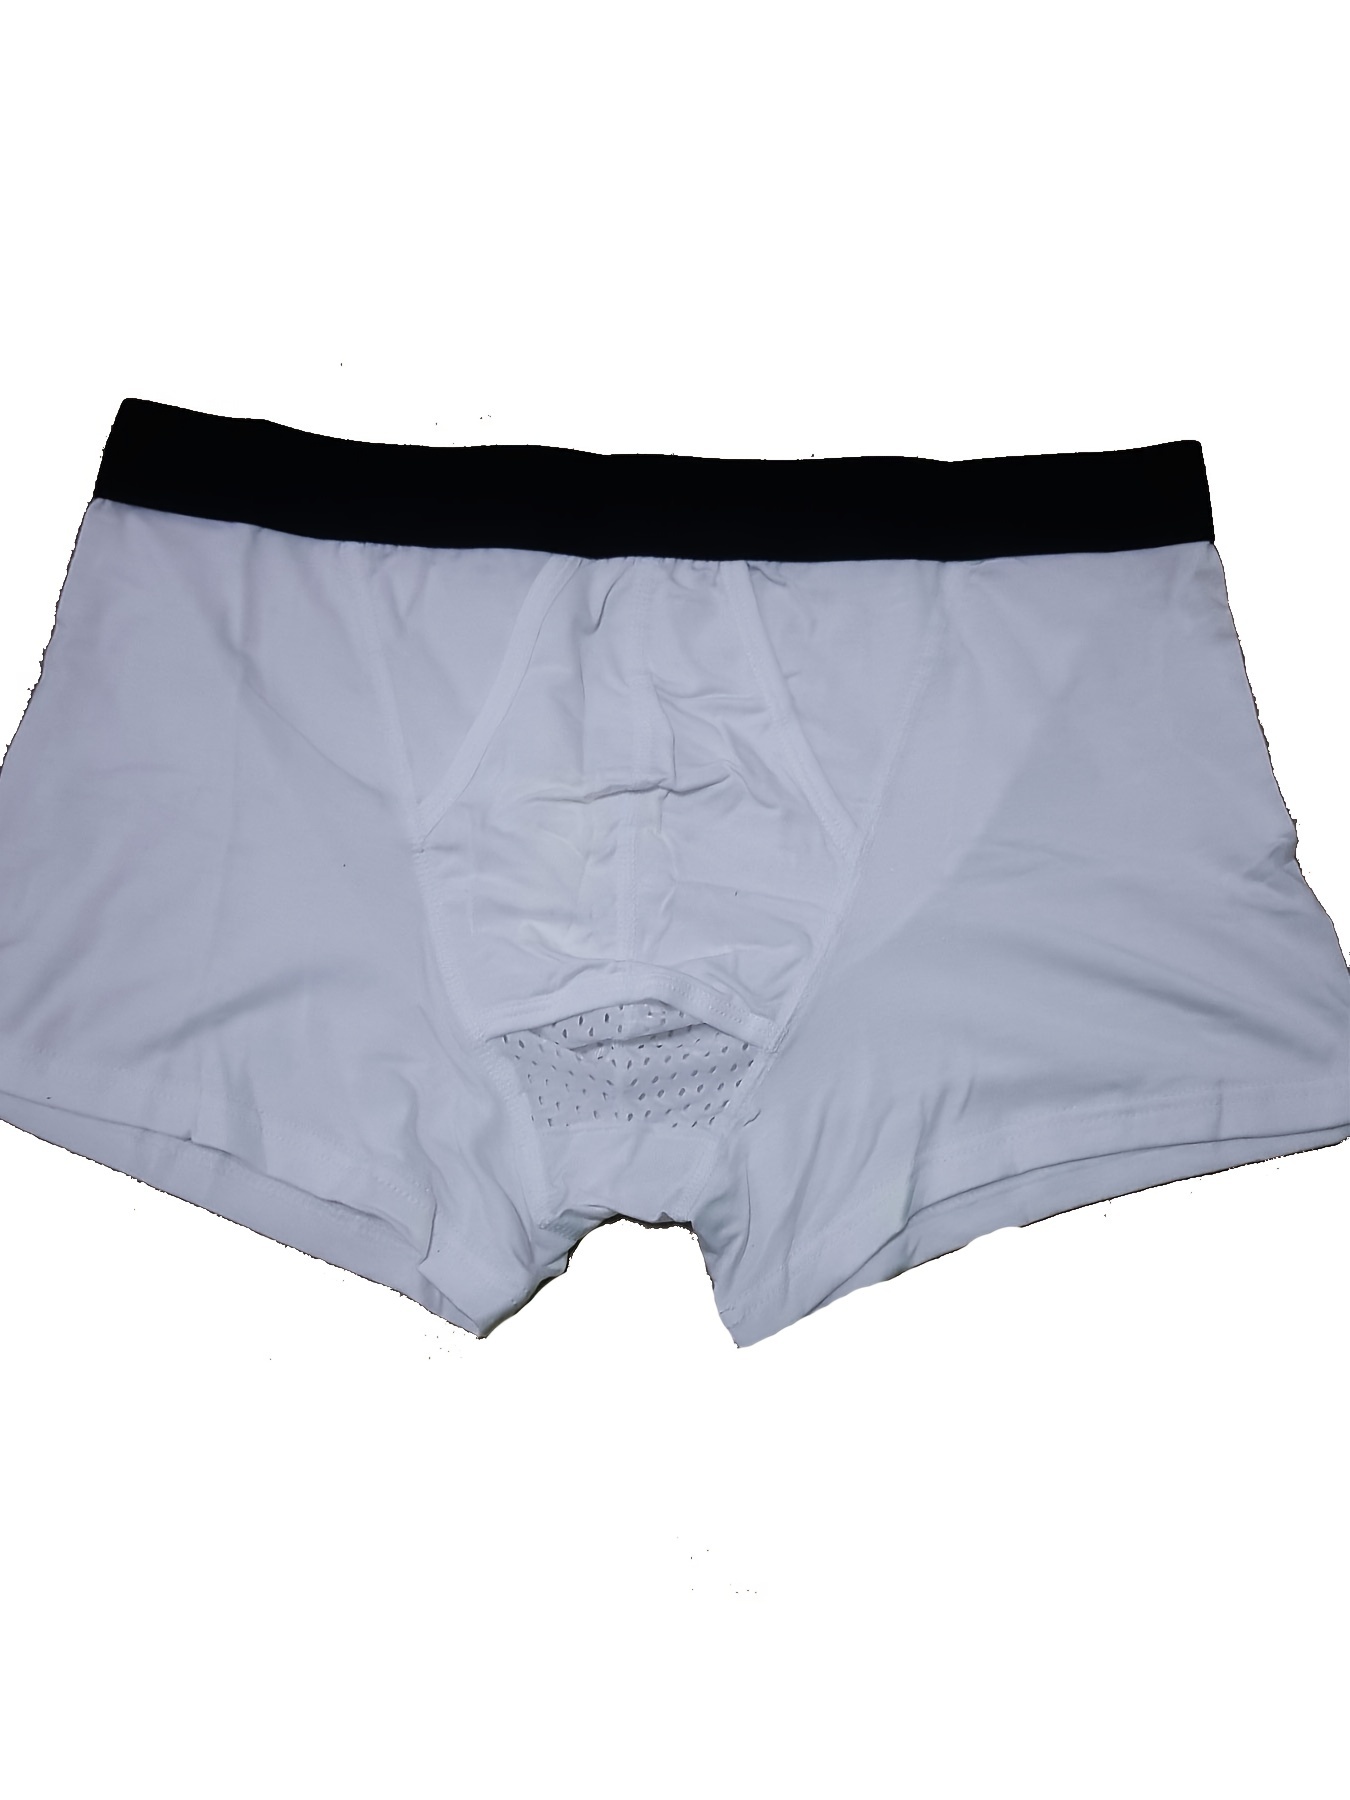 Underpants Elephant Portrait Breathbale Panties Male Underwear Print Shorts  Boxer Briefs From 16,89 €